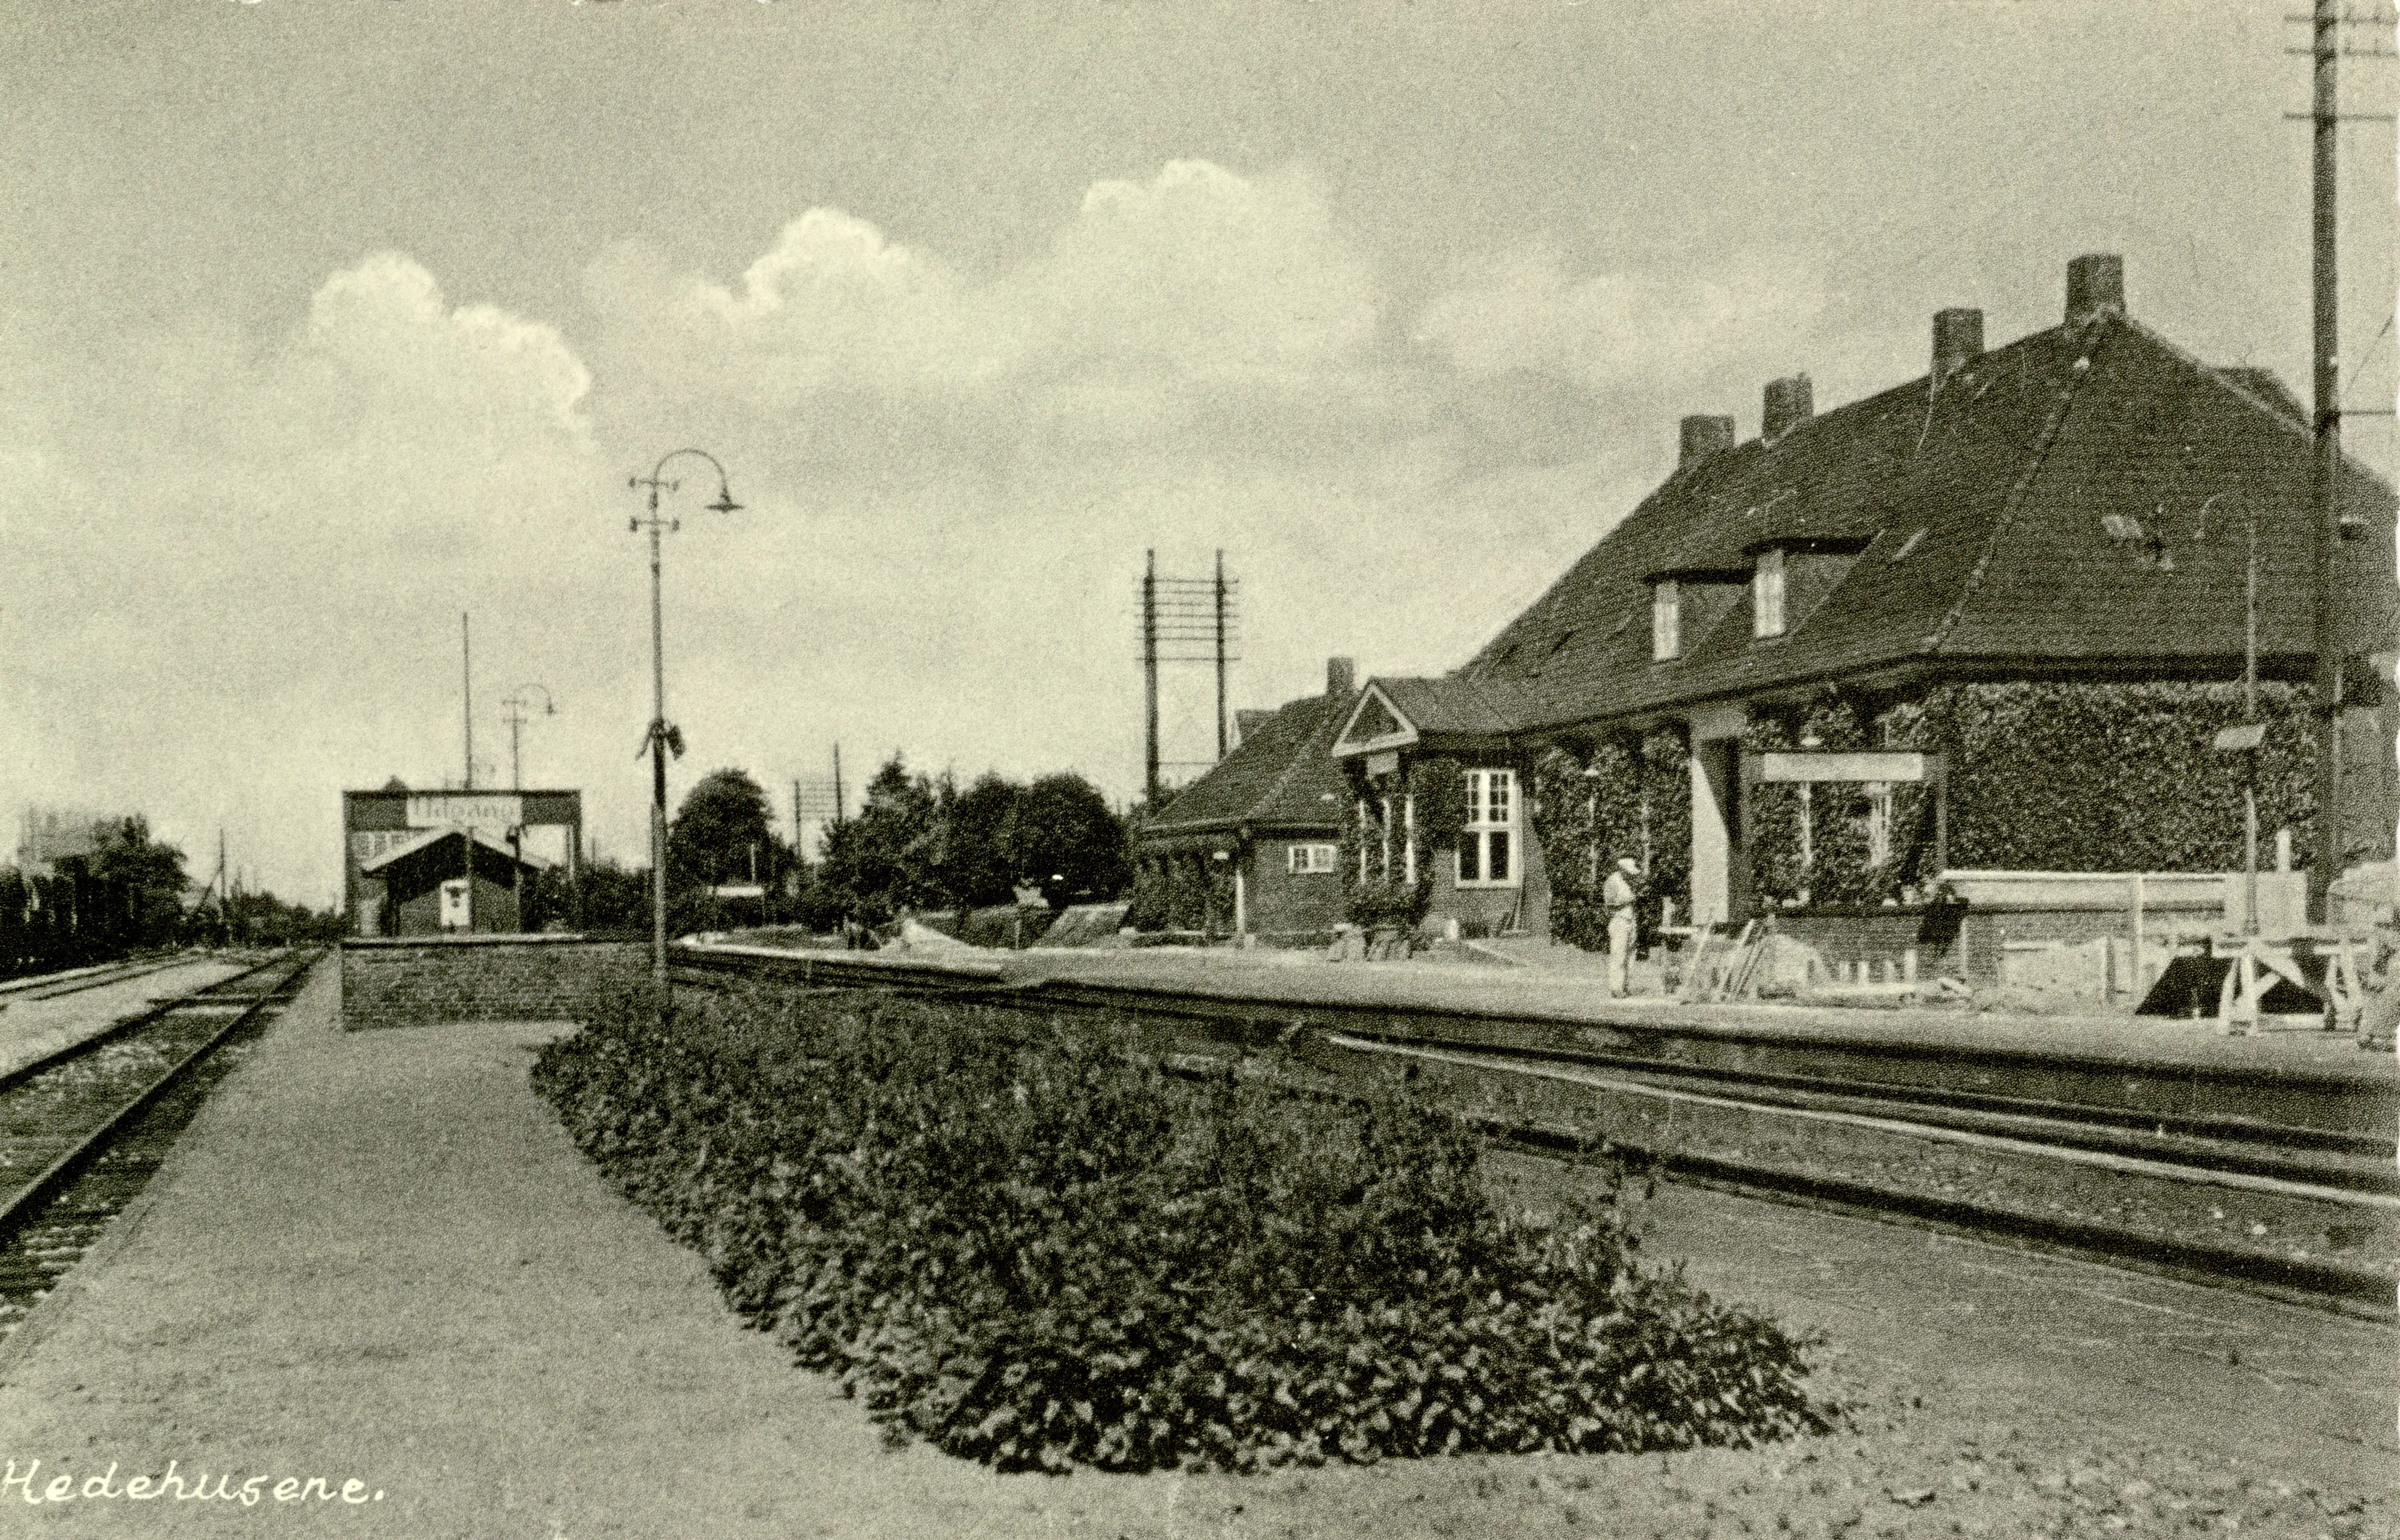 Postkort med Hedehusene Station.